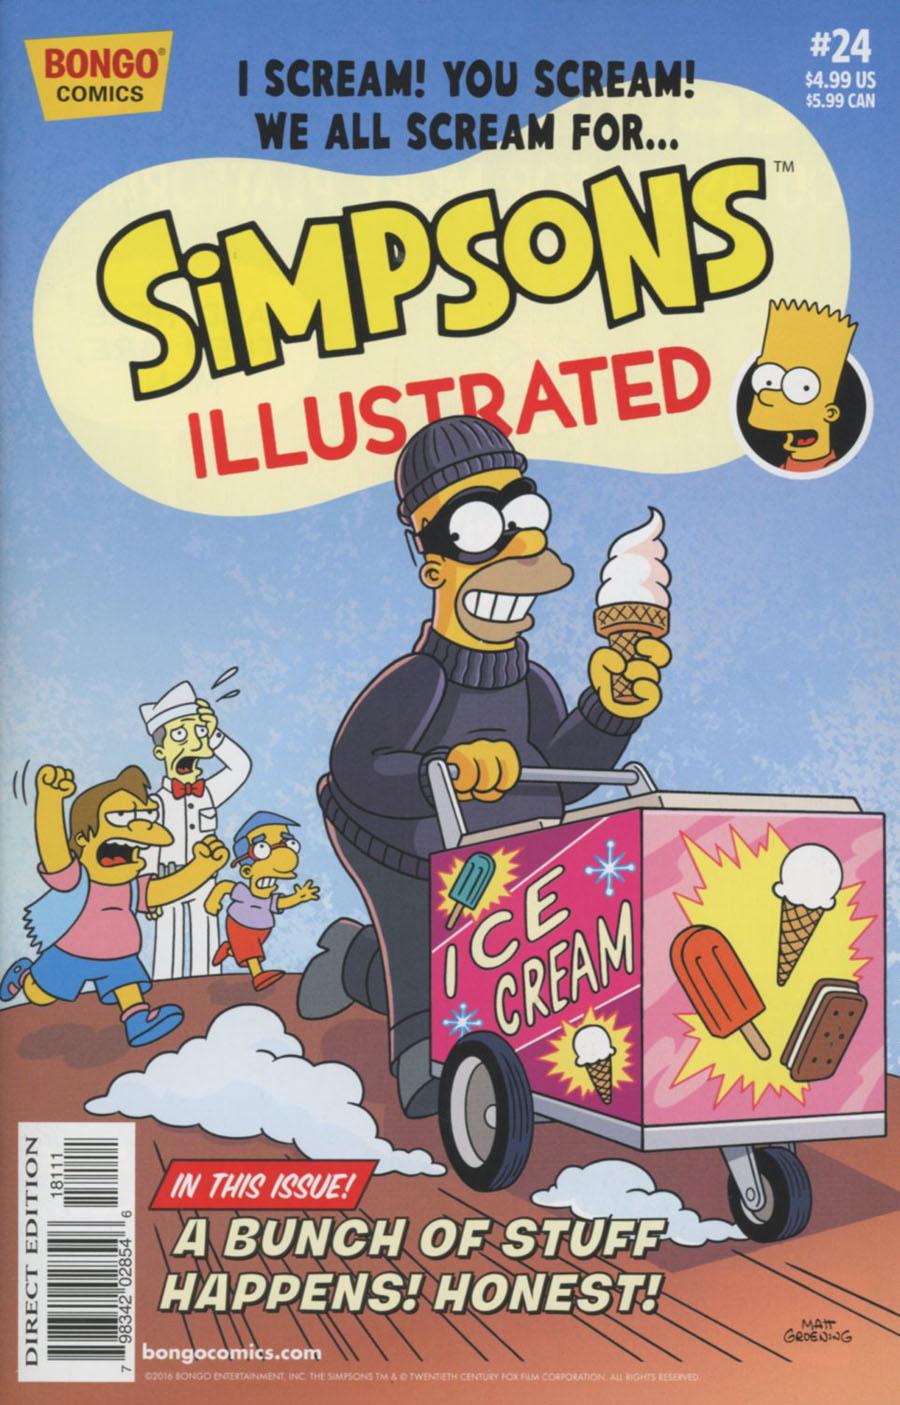 Simpsons Illustrated Vol. 1 #24